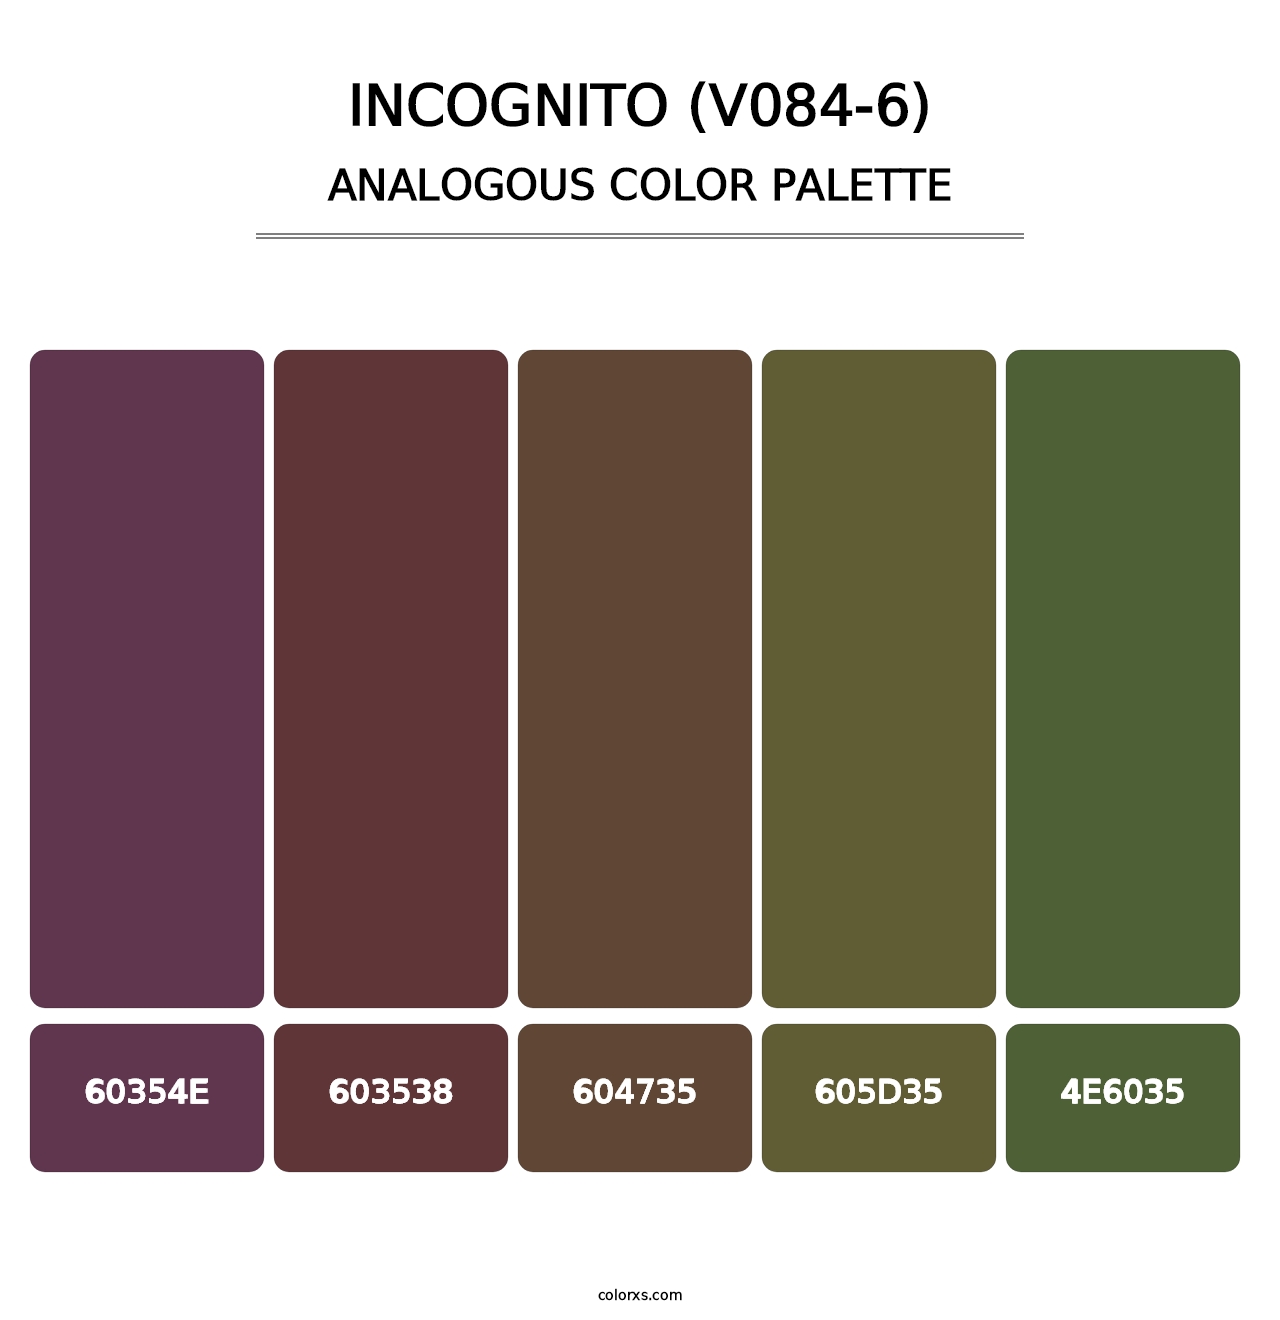 Incognito (V084-6) - Analogous Color Palette